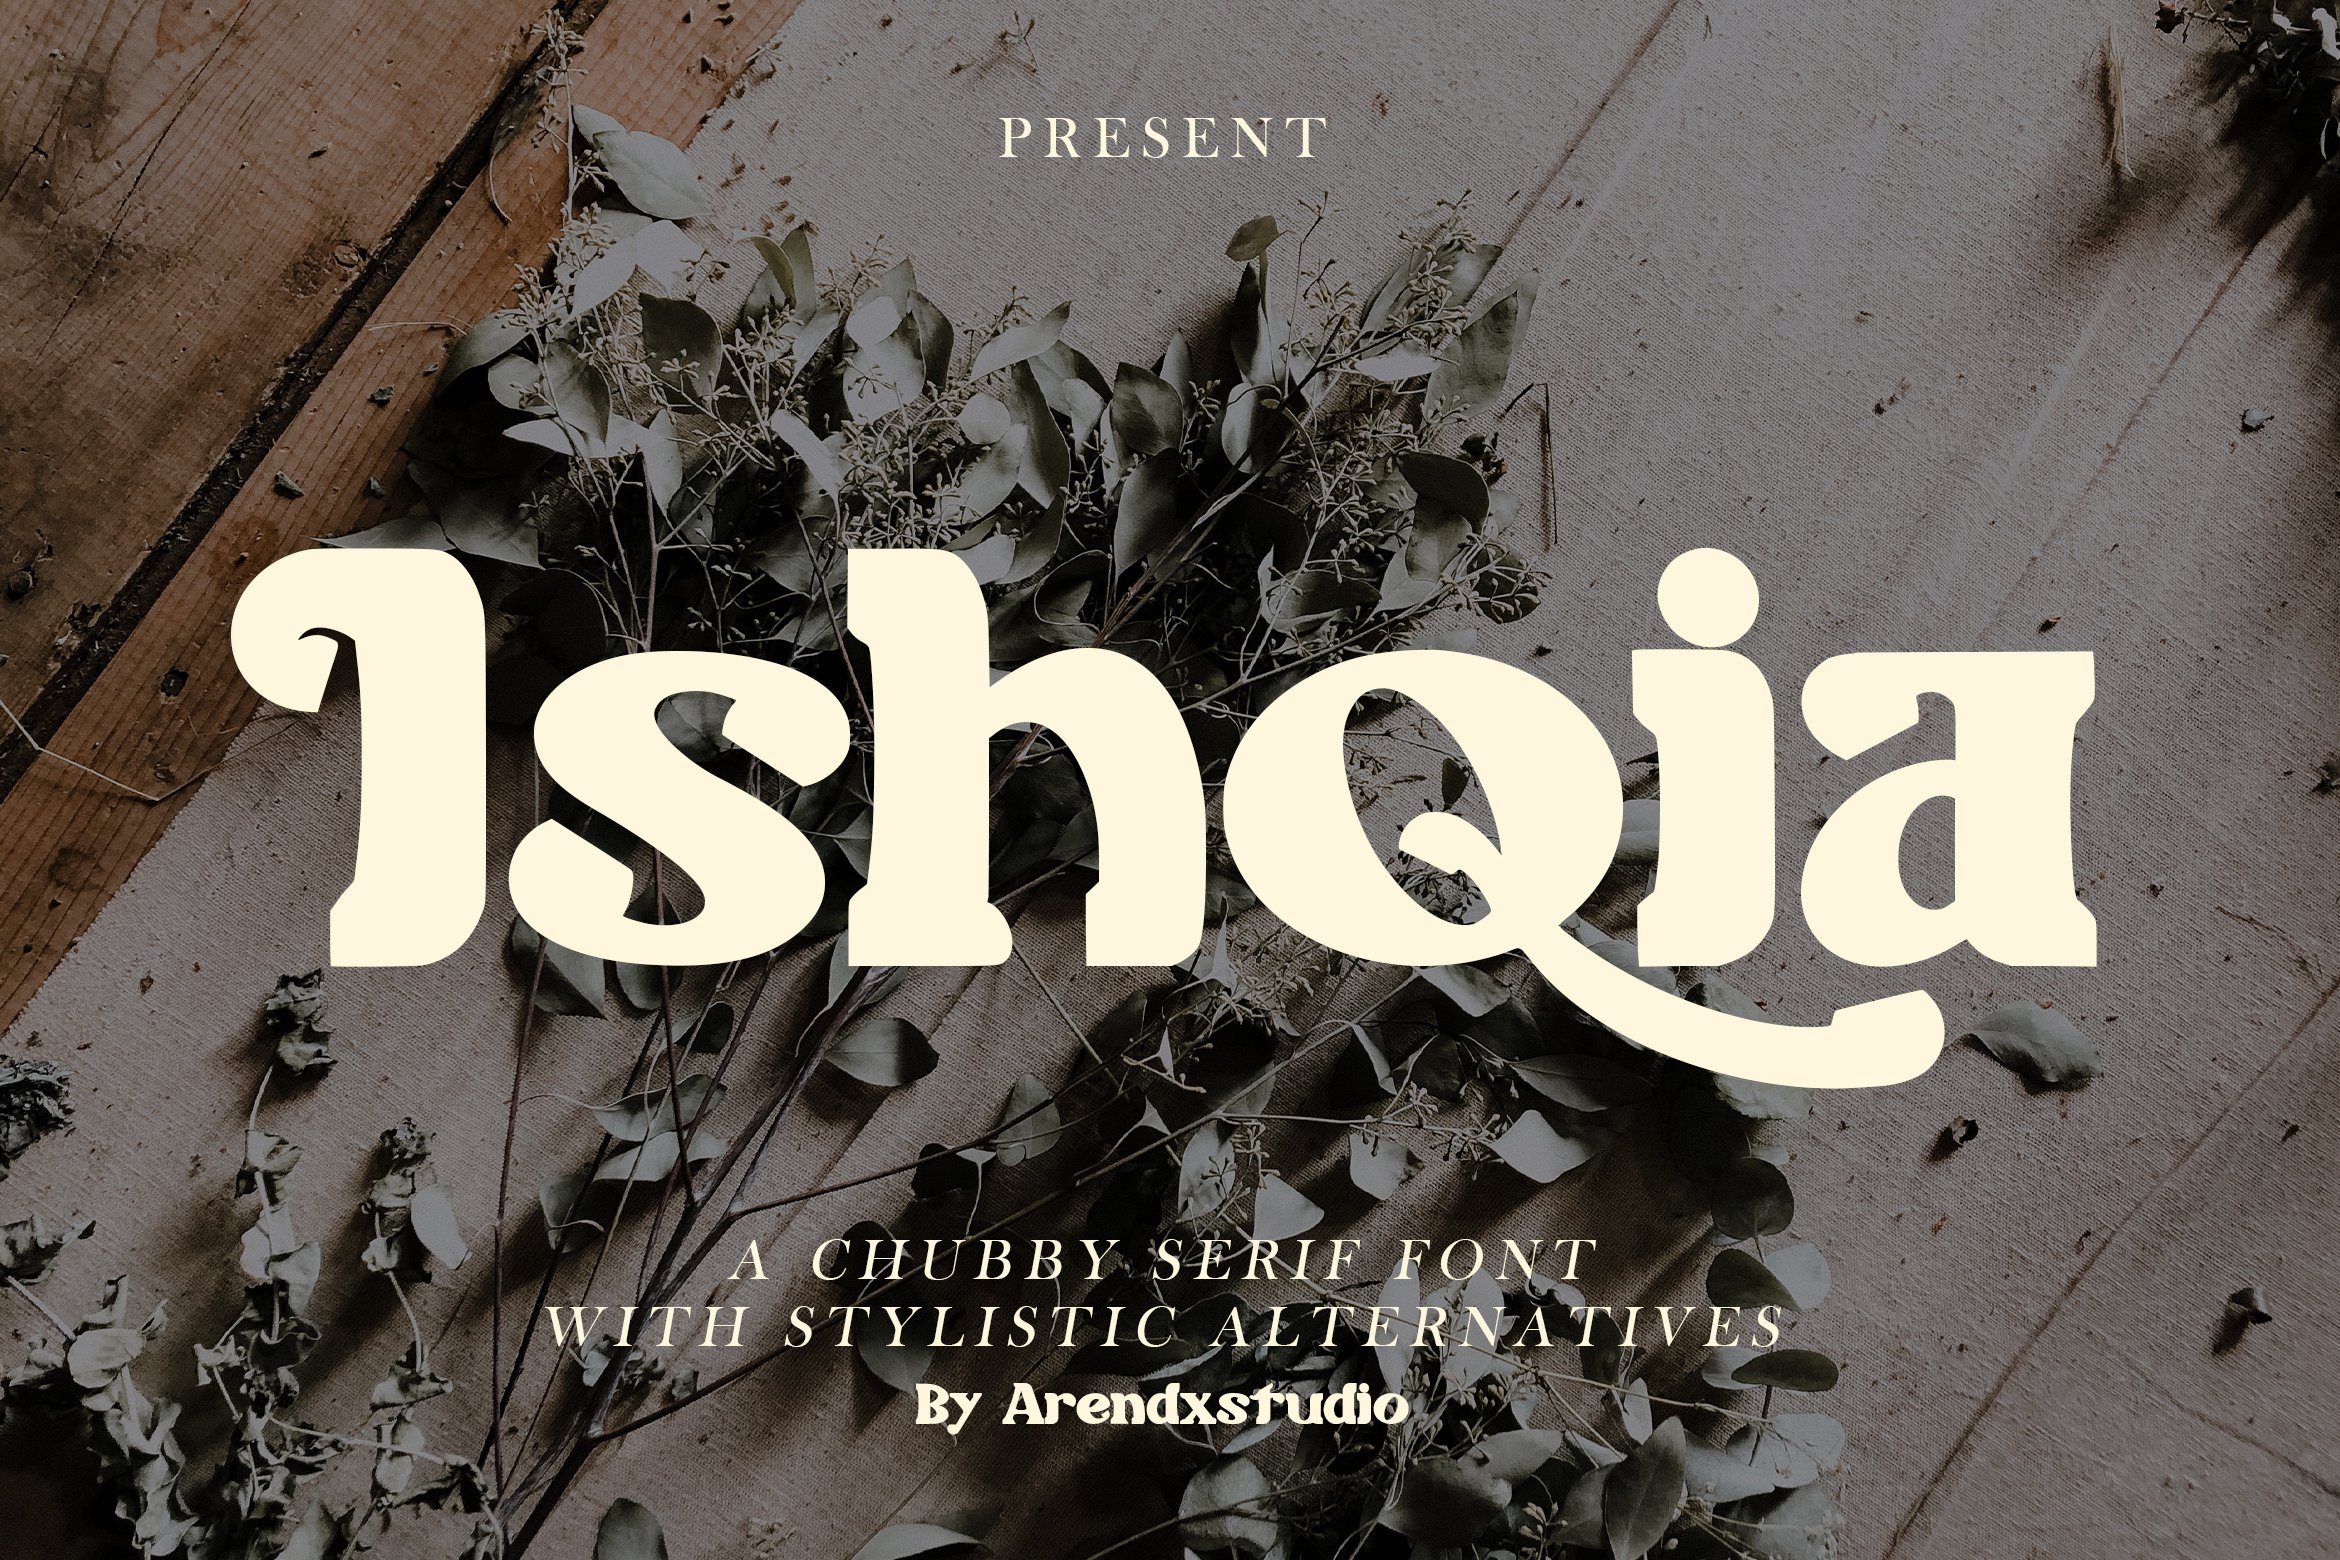 Ishqia - Chubby Serif Font cover image.